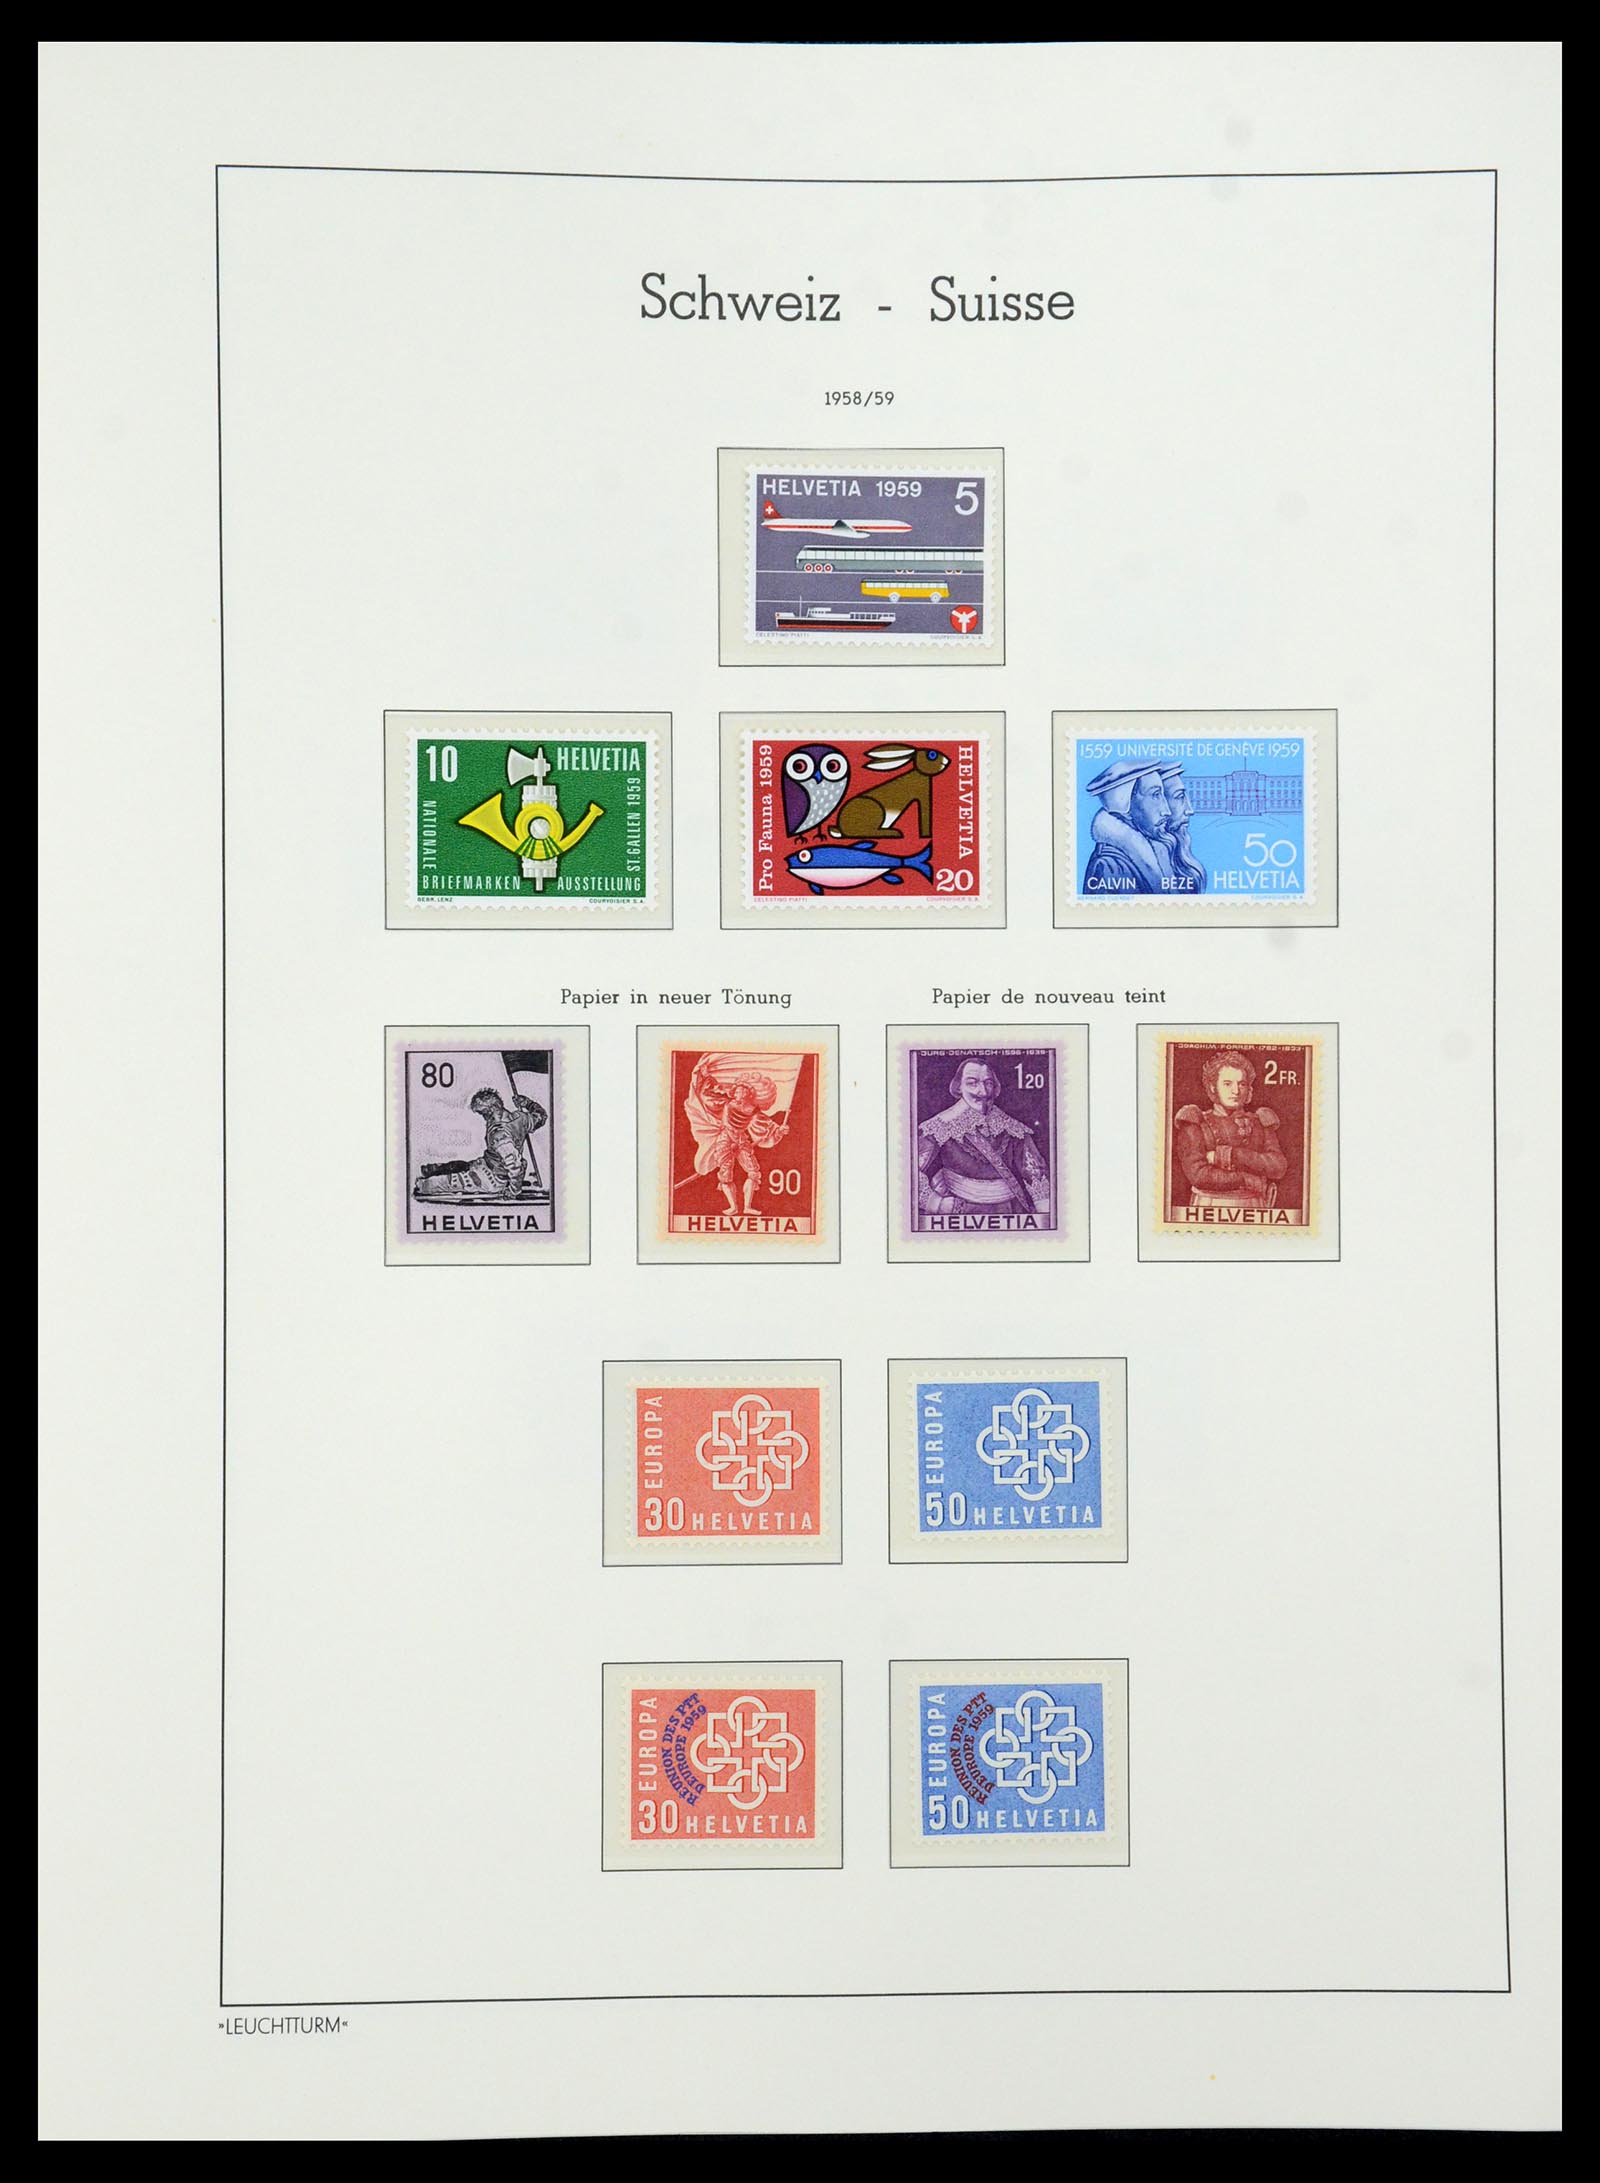 36284 057 - Stamp collection 36284 Switzerland 1854-2006.